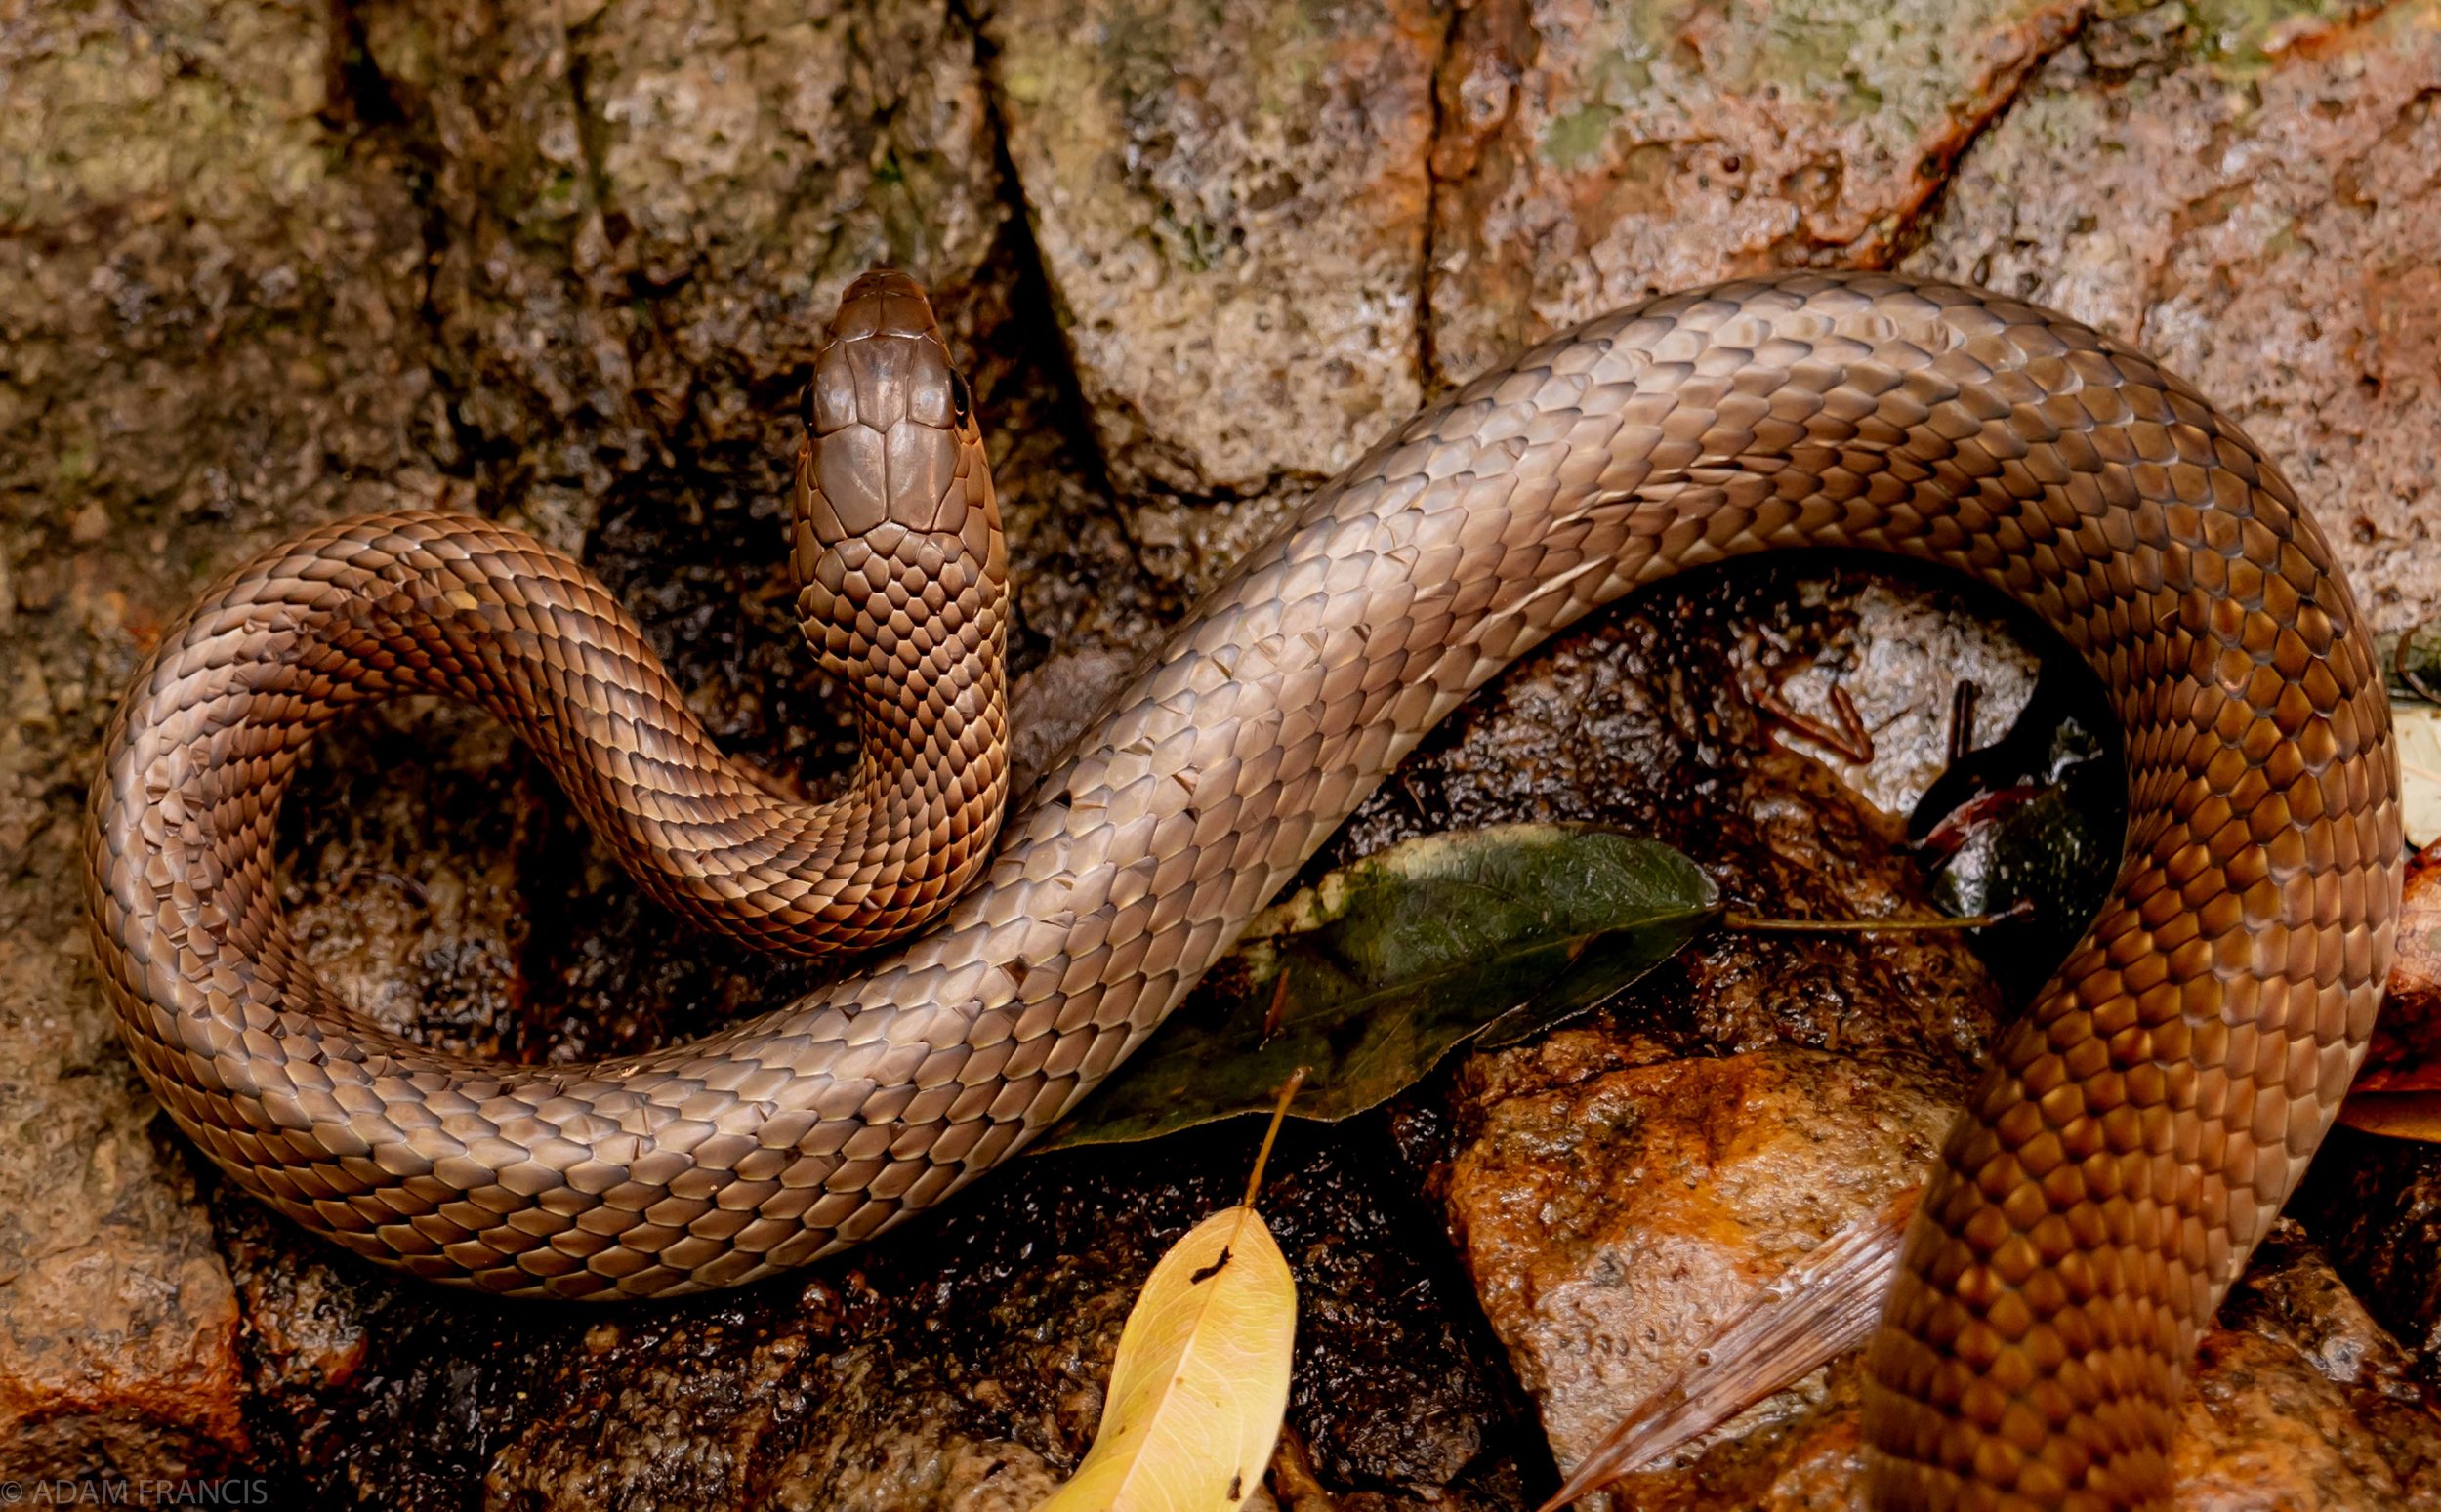 Indo Chinese Rat Snake - Ptyas korros